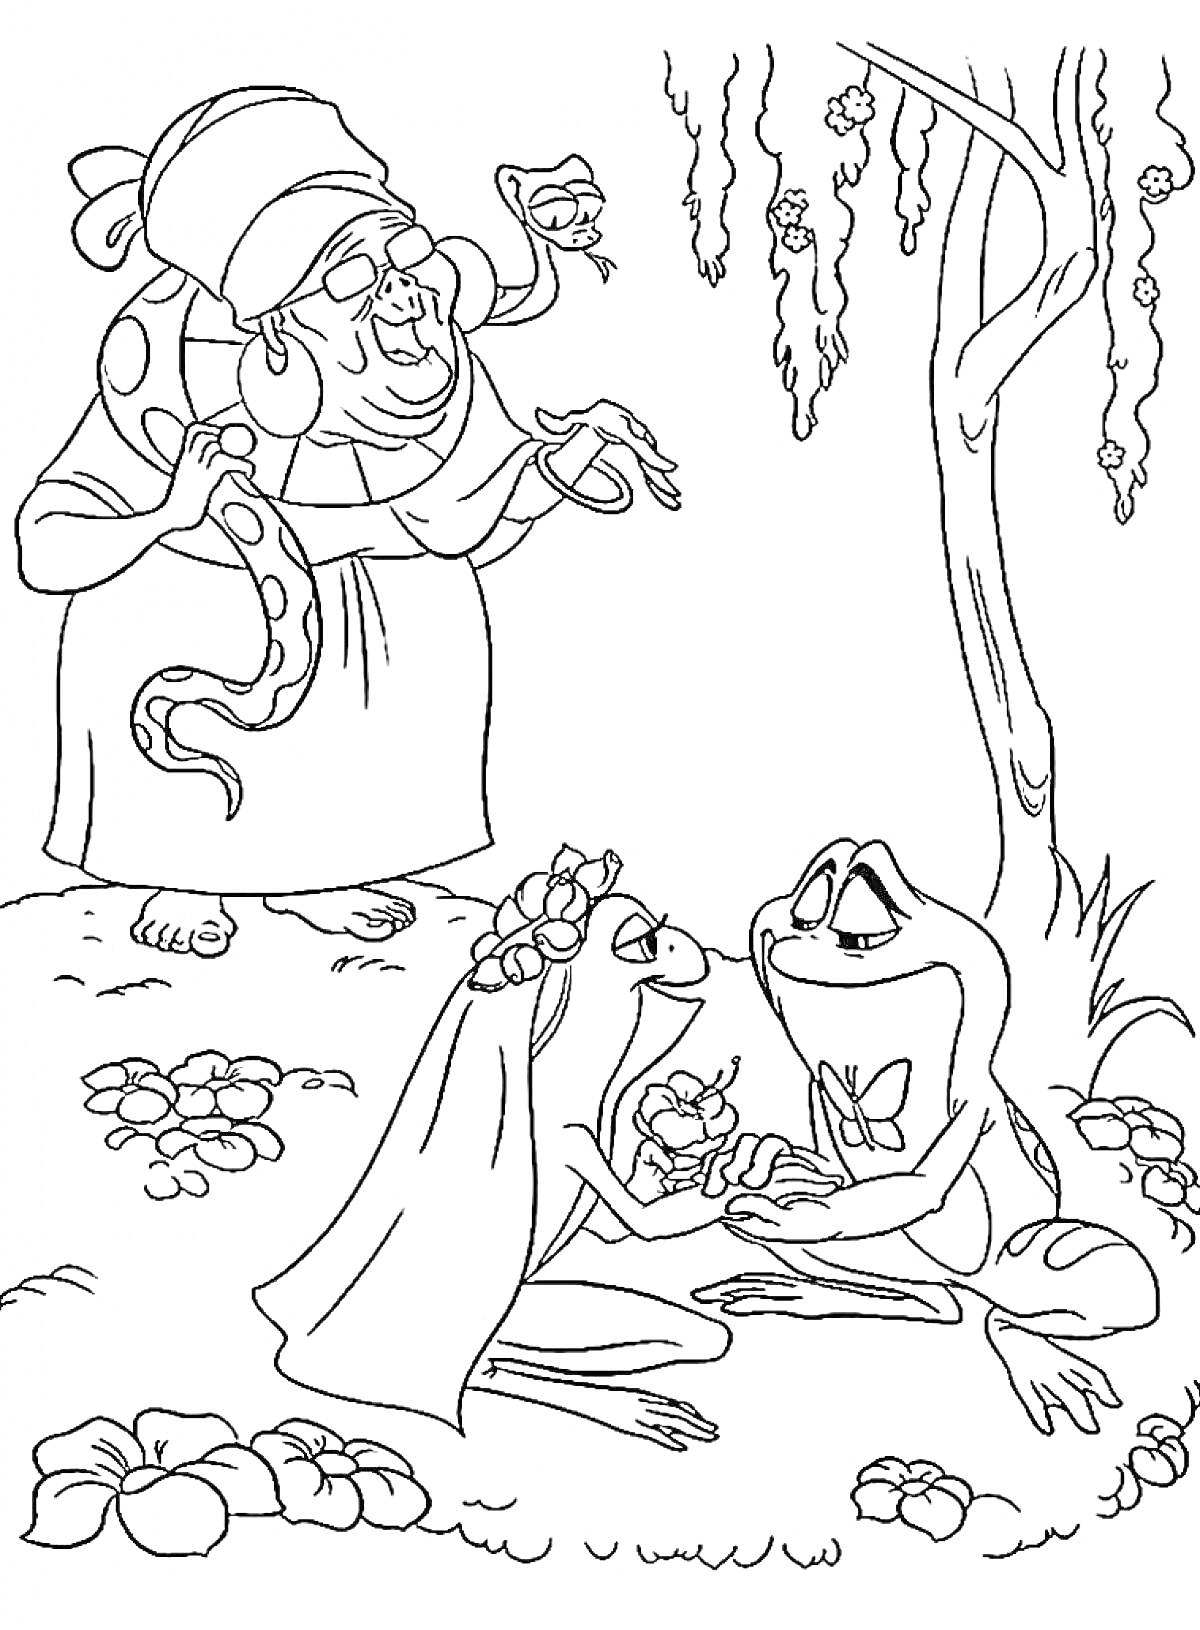 Принцесса-лягушка, принц-лягушонок, колдунья, цветы, дерево